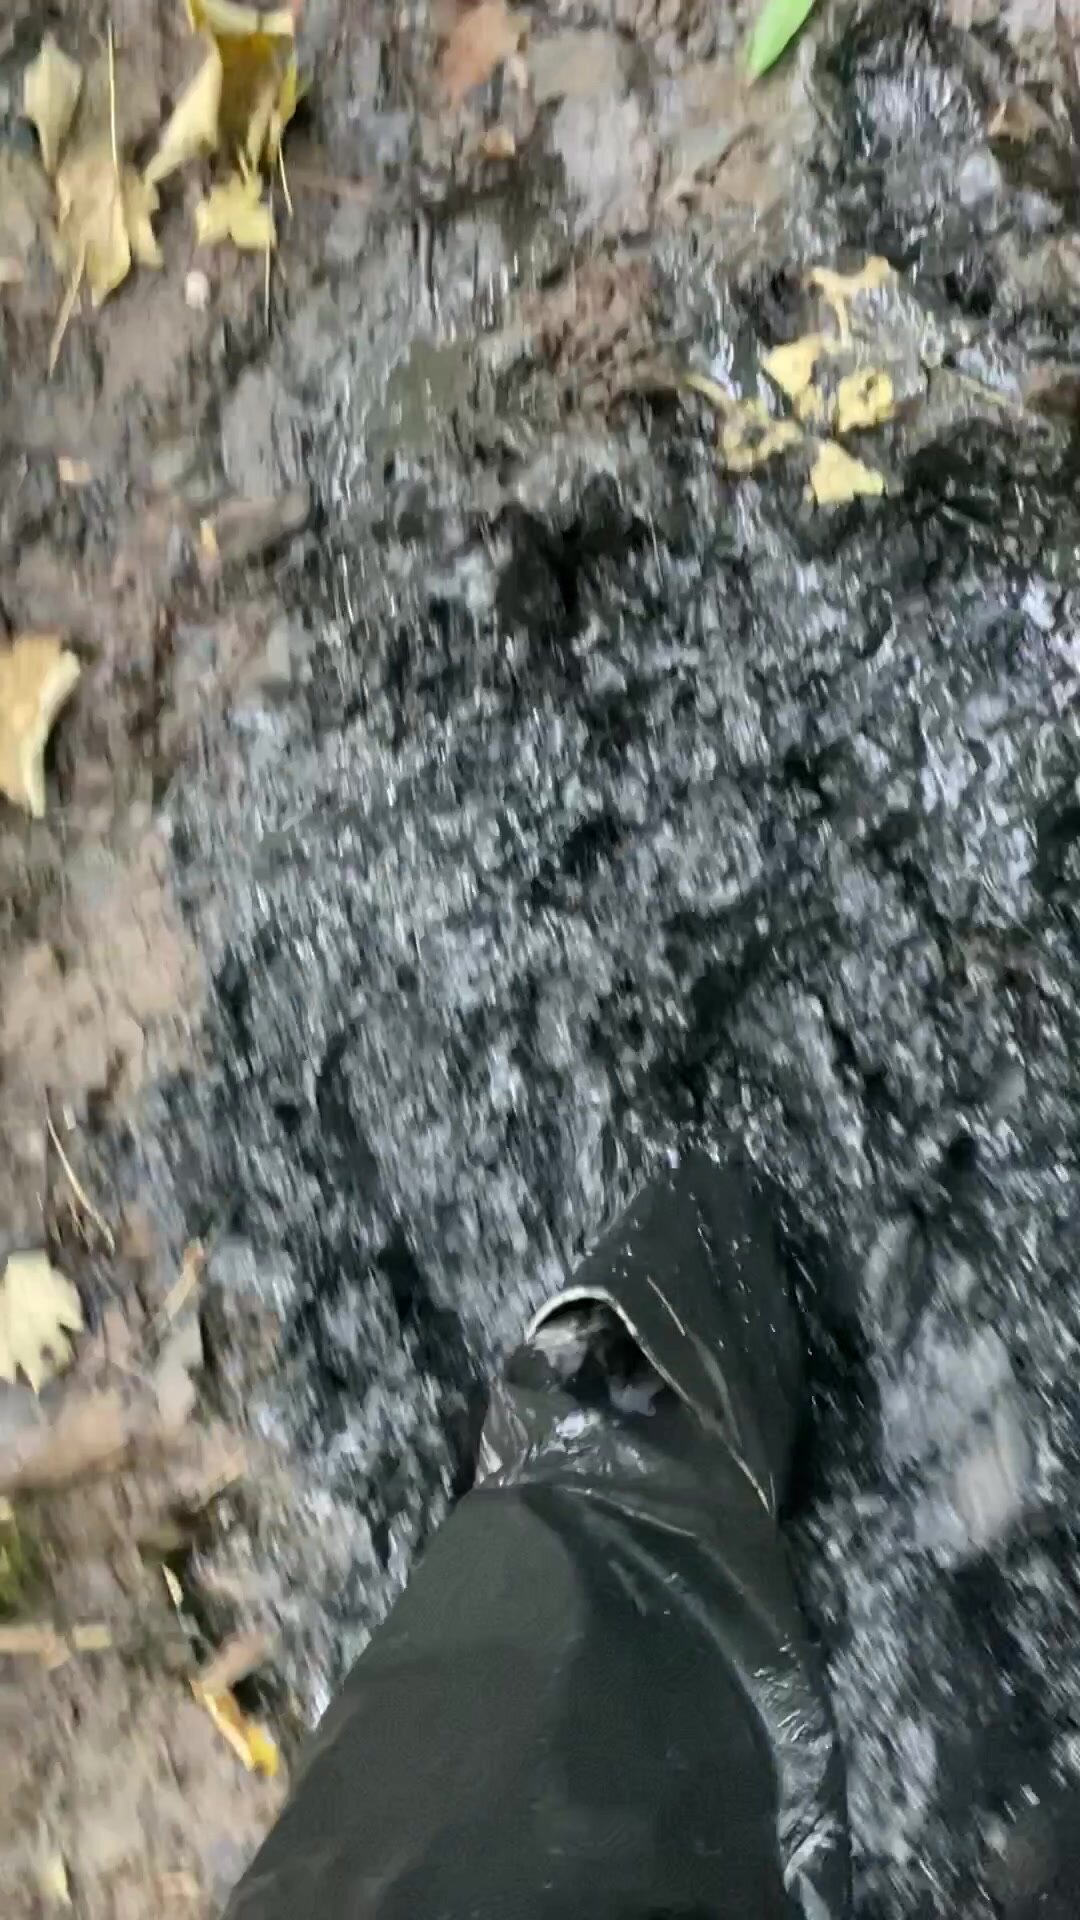 Dunlop’s in deep mud